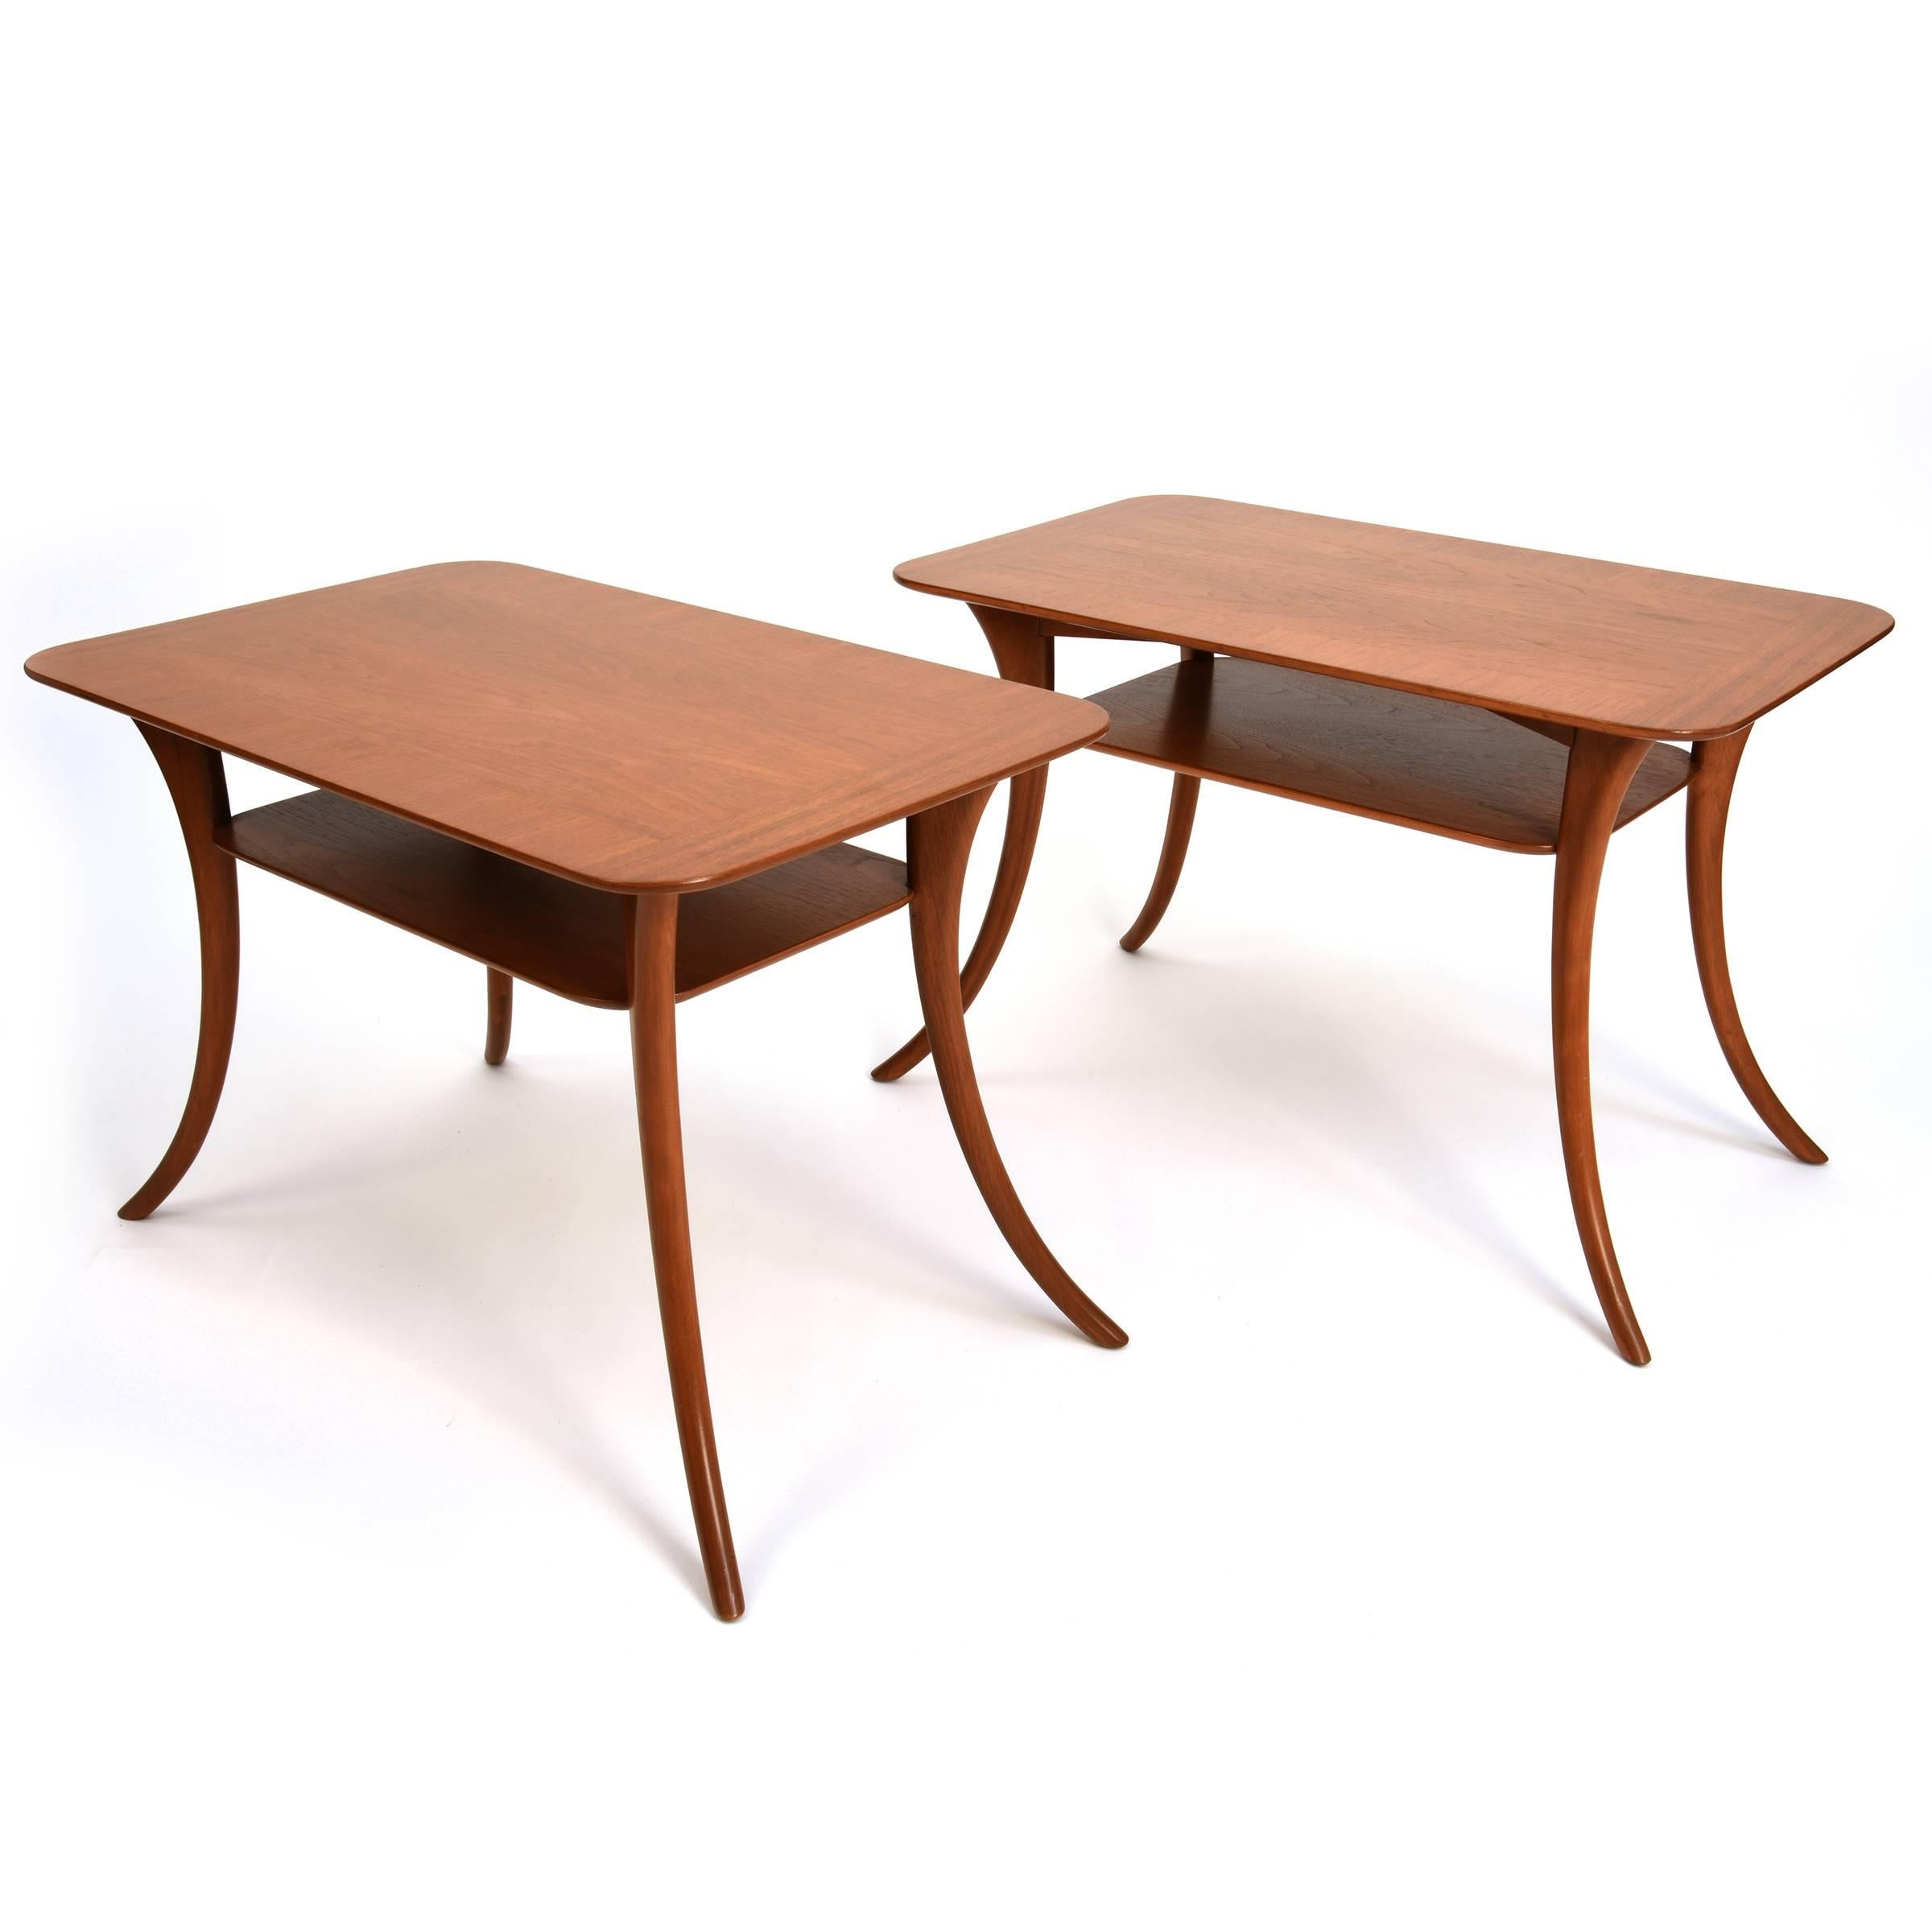 A pair of Klismos Sabre leg end tables by T.H. Robsjohn-Gibbings, model 3328

USA, 1950s

Manufactured by Widdicomb Furniture, Grand Rapids, Michigan

Measure: 20 H x 18 W x 30 D in

Mahogany

Original pair.